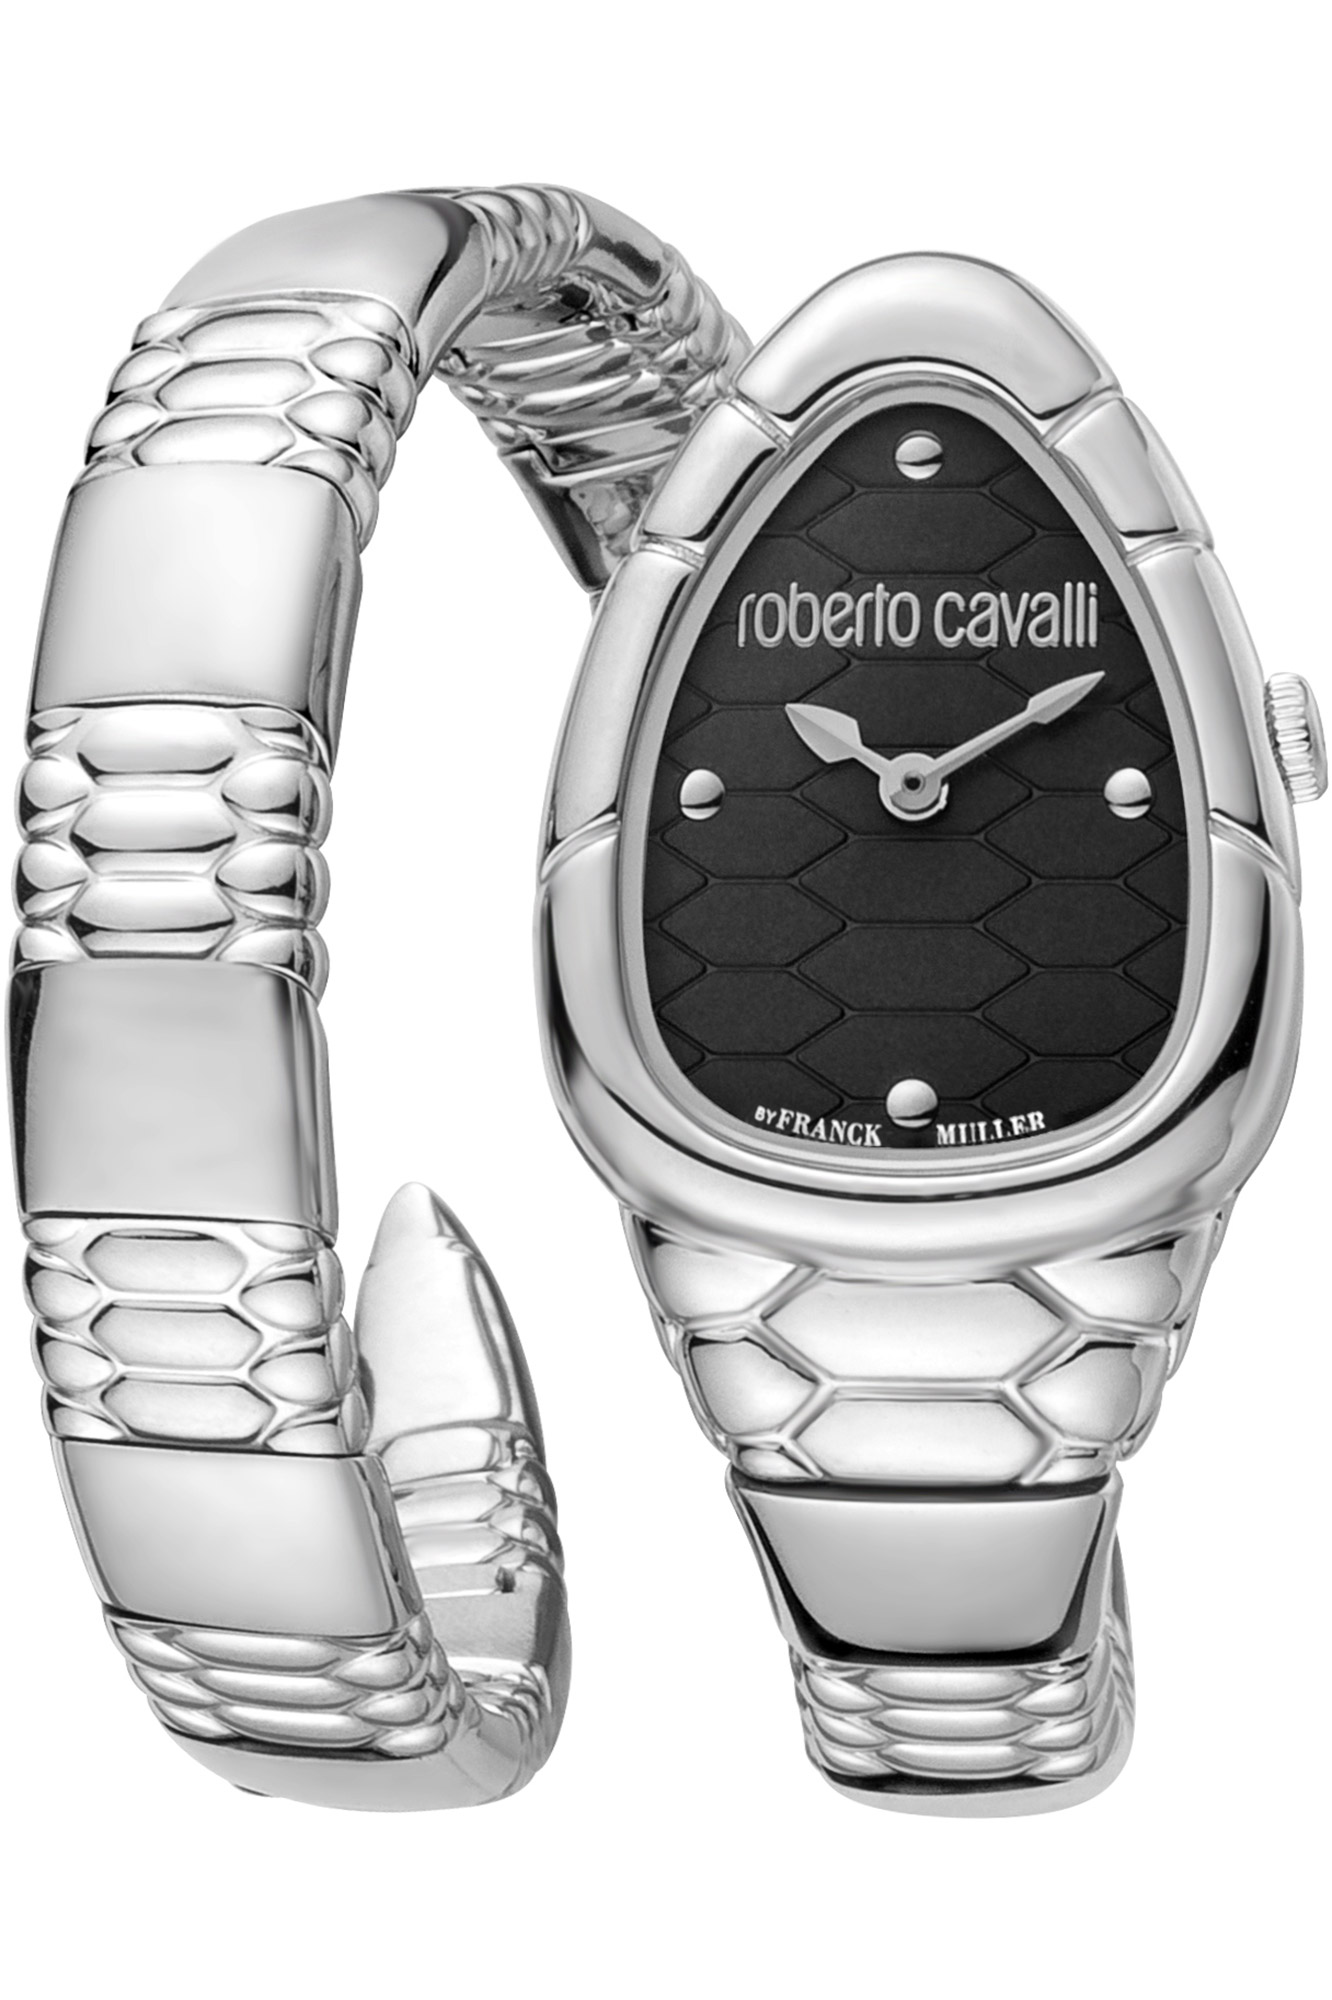 Reloj Roberto Cavalli by Franck Muller rv1l184m0021